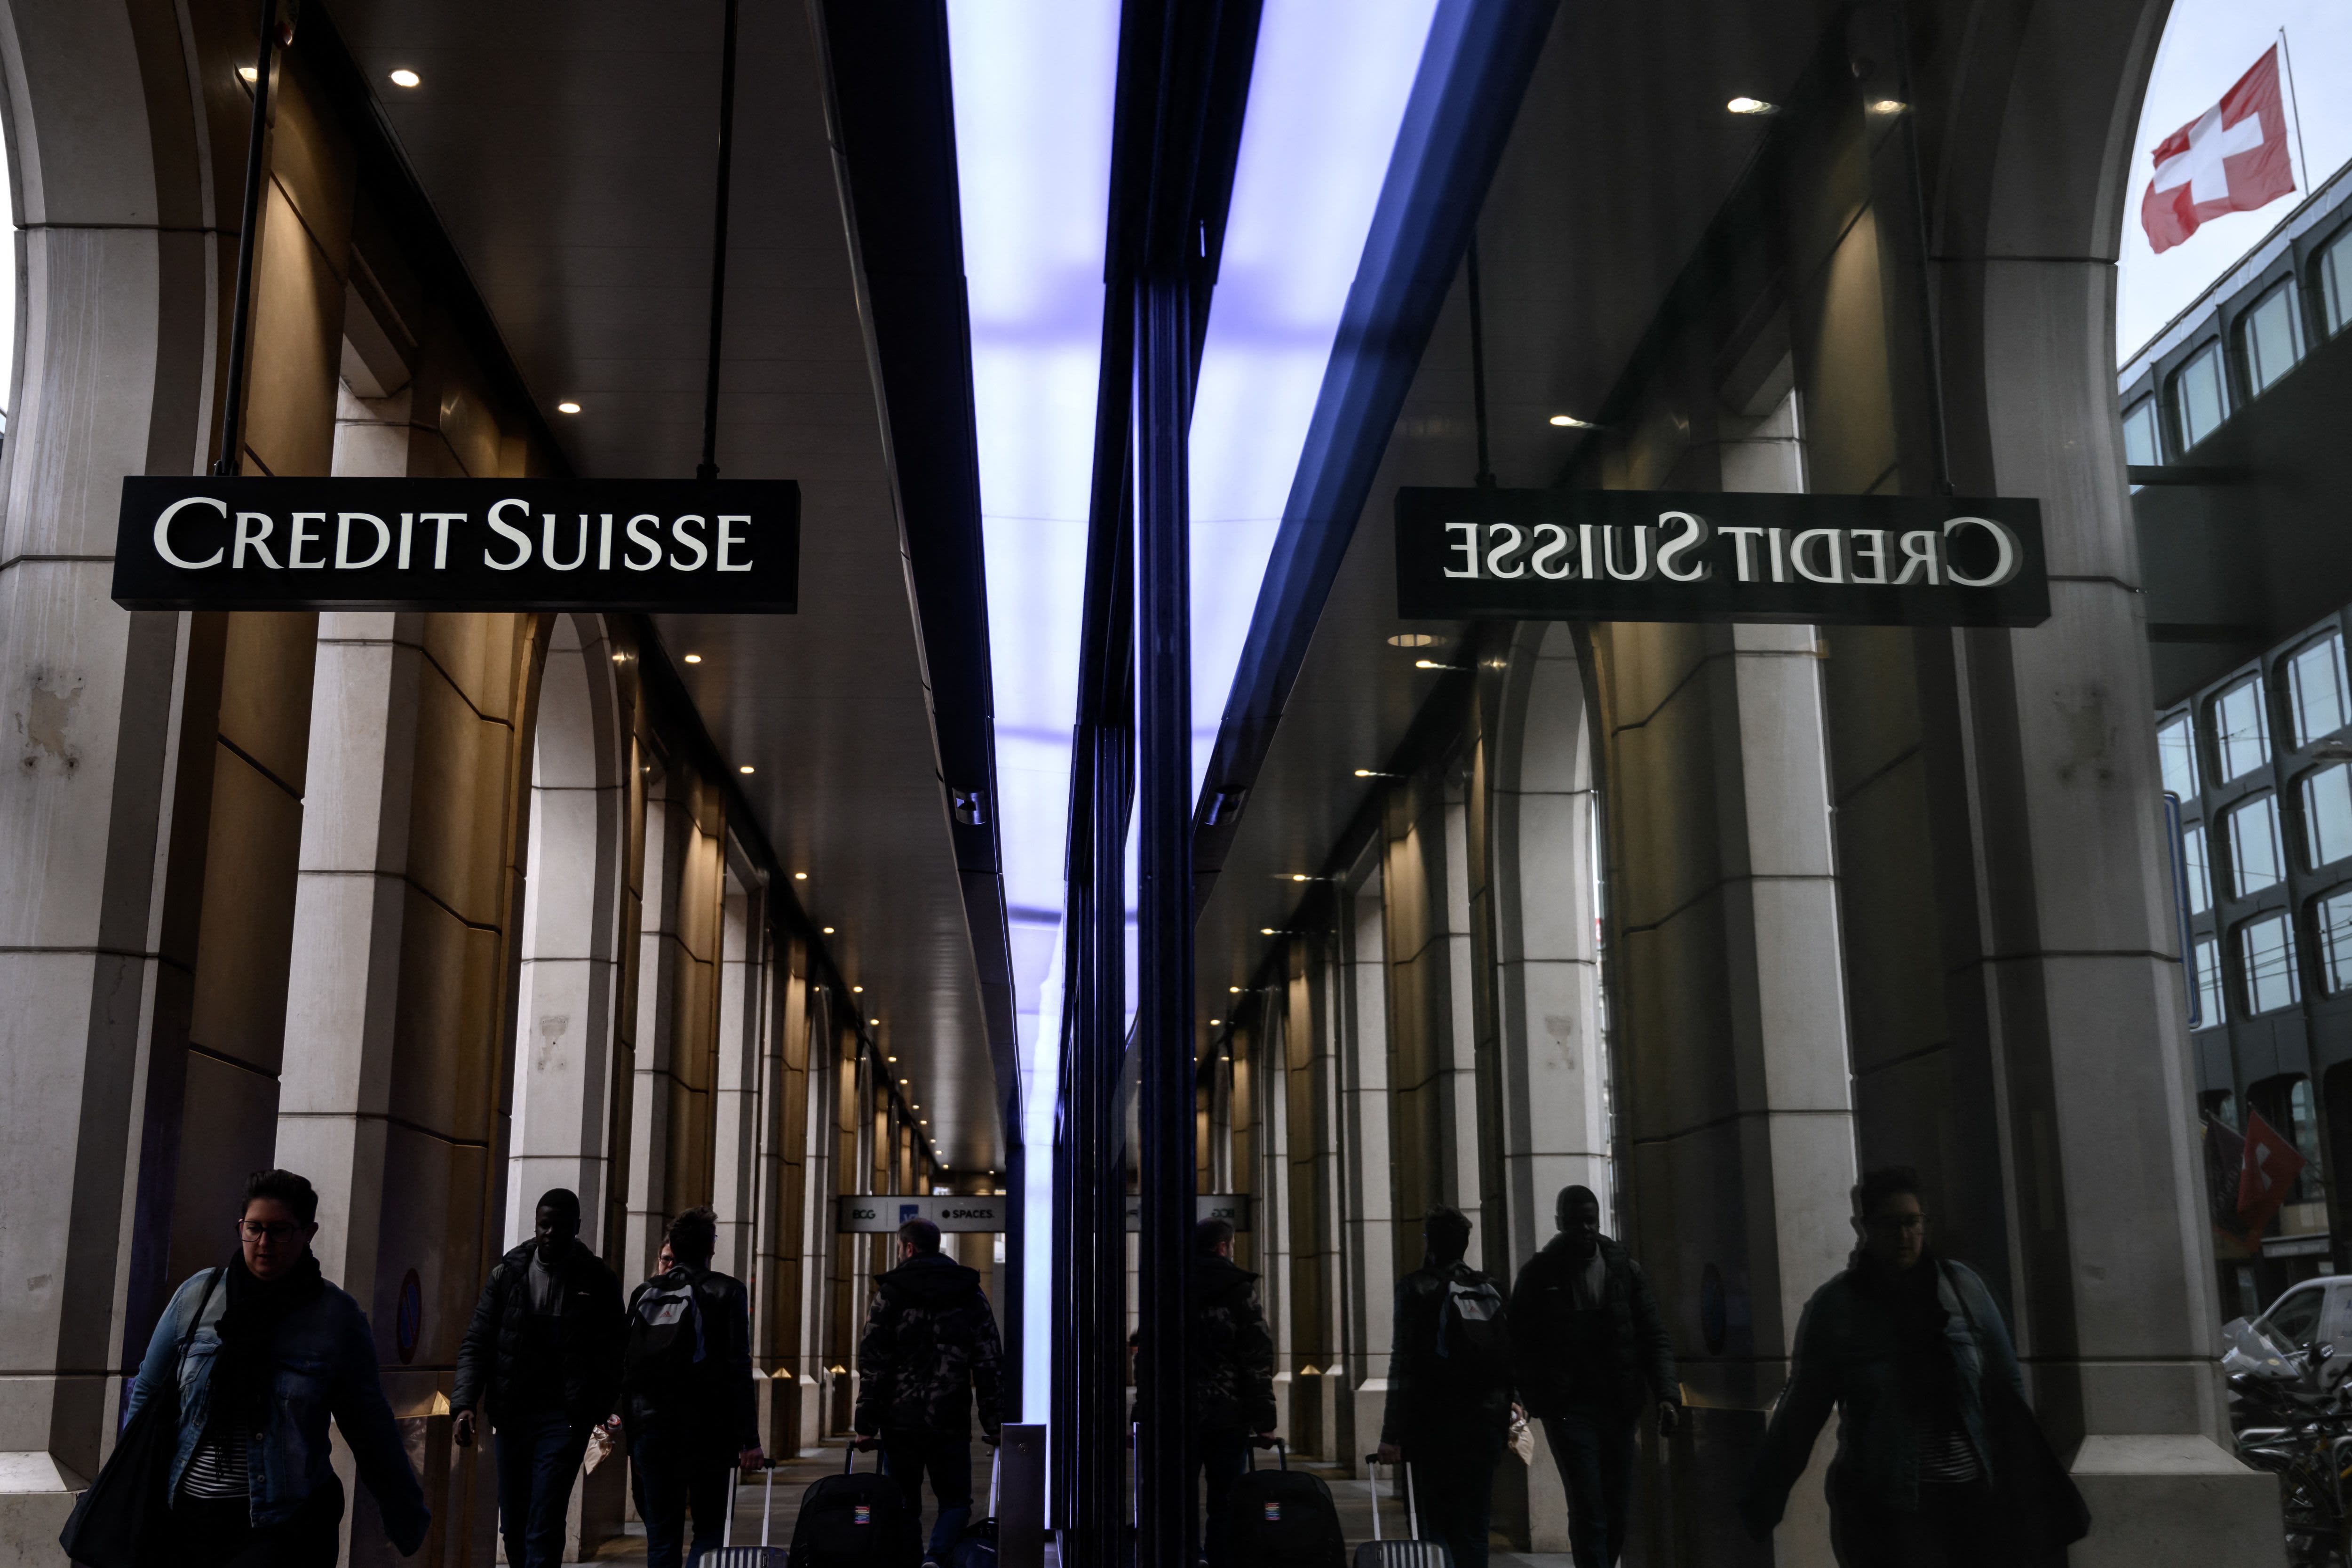 Credit Suisse Under Pressure, Shortsellers Seem Eyeing Another Global Bank